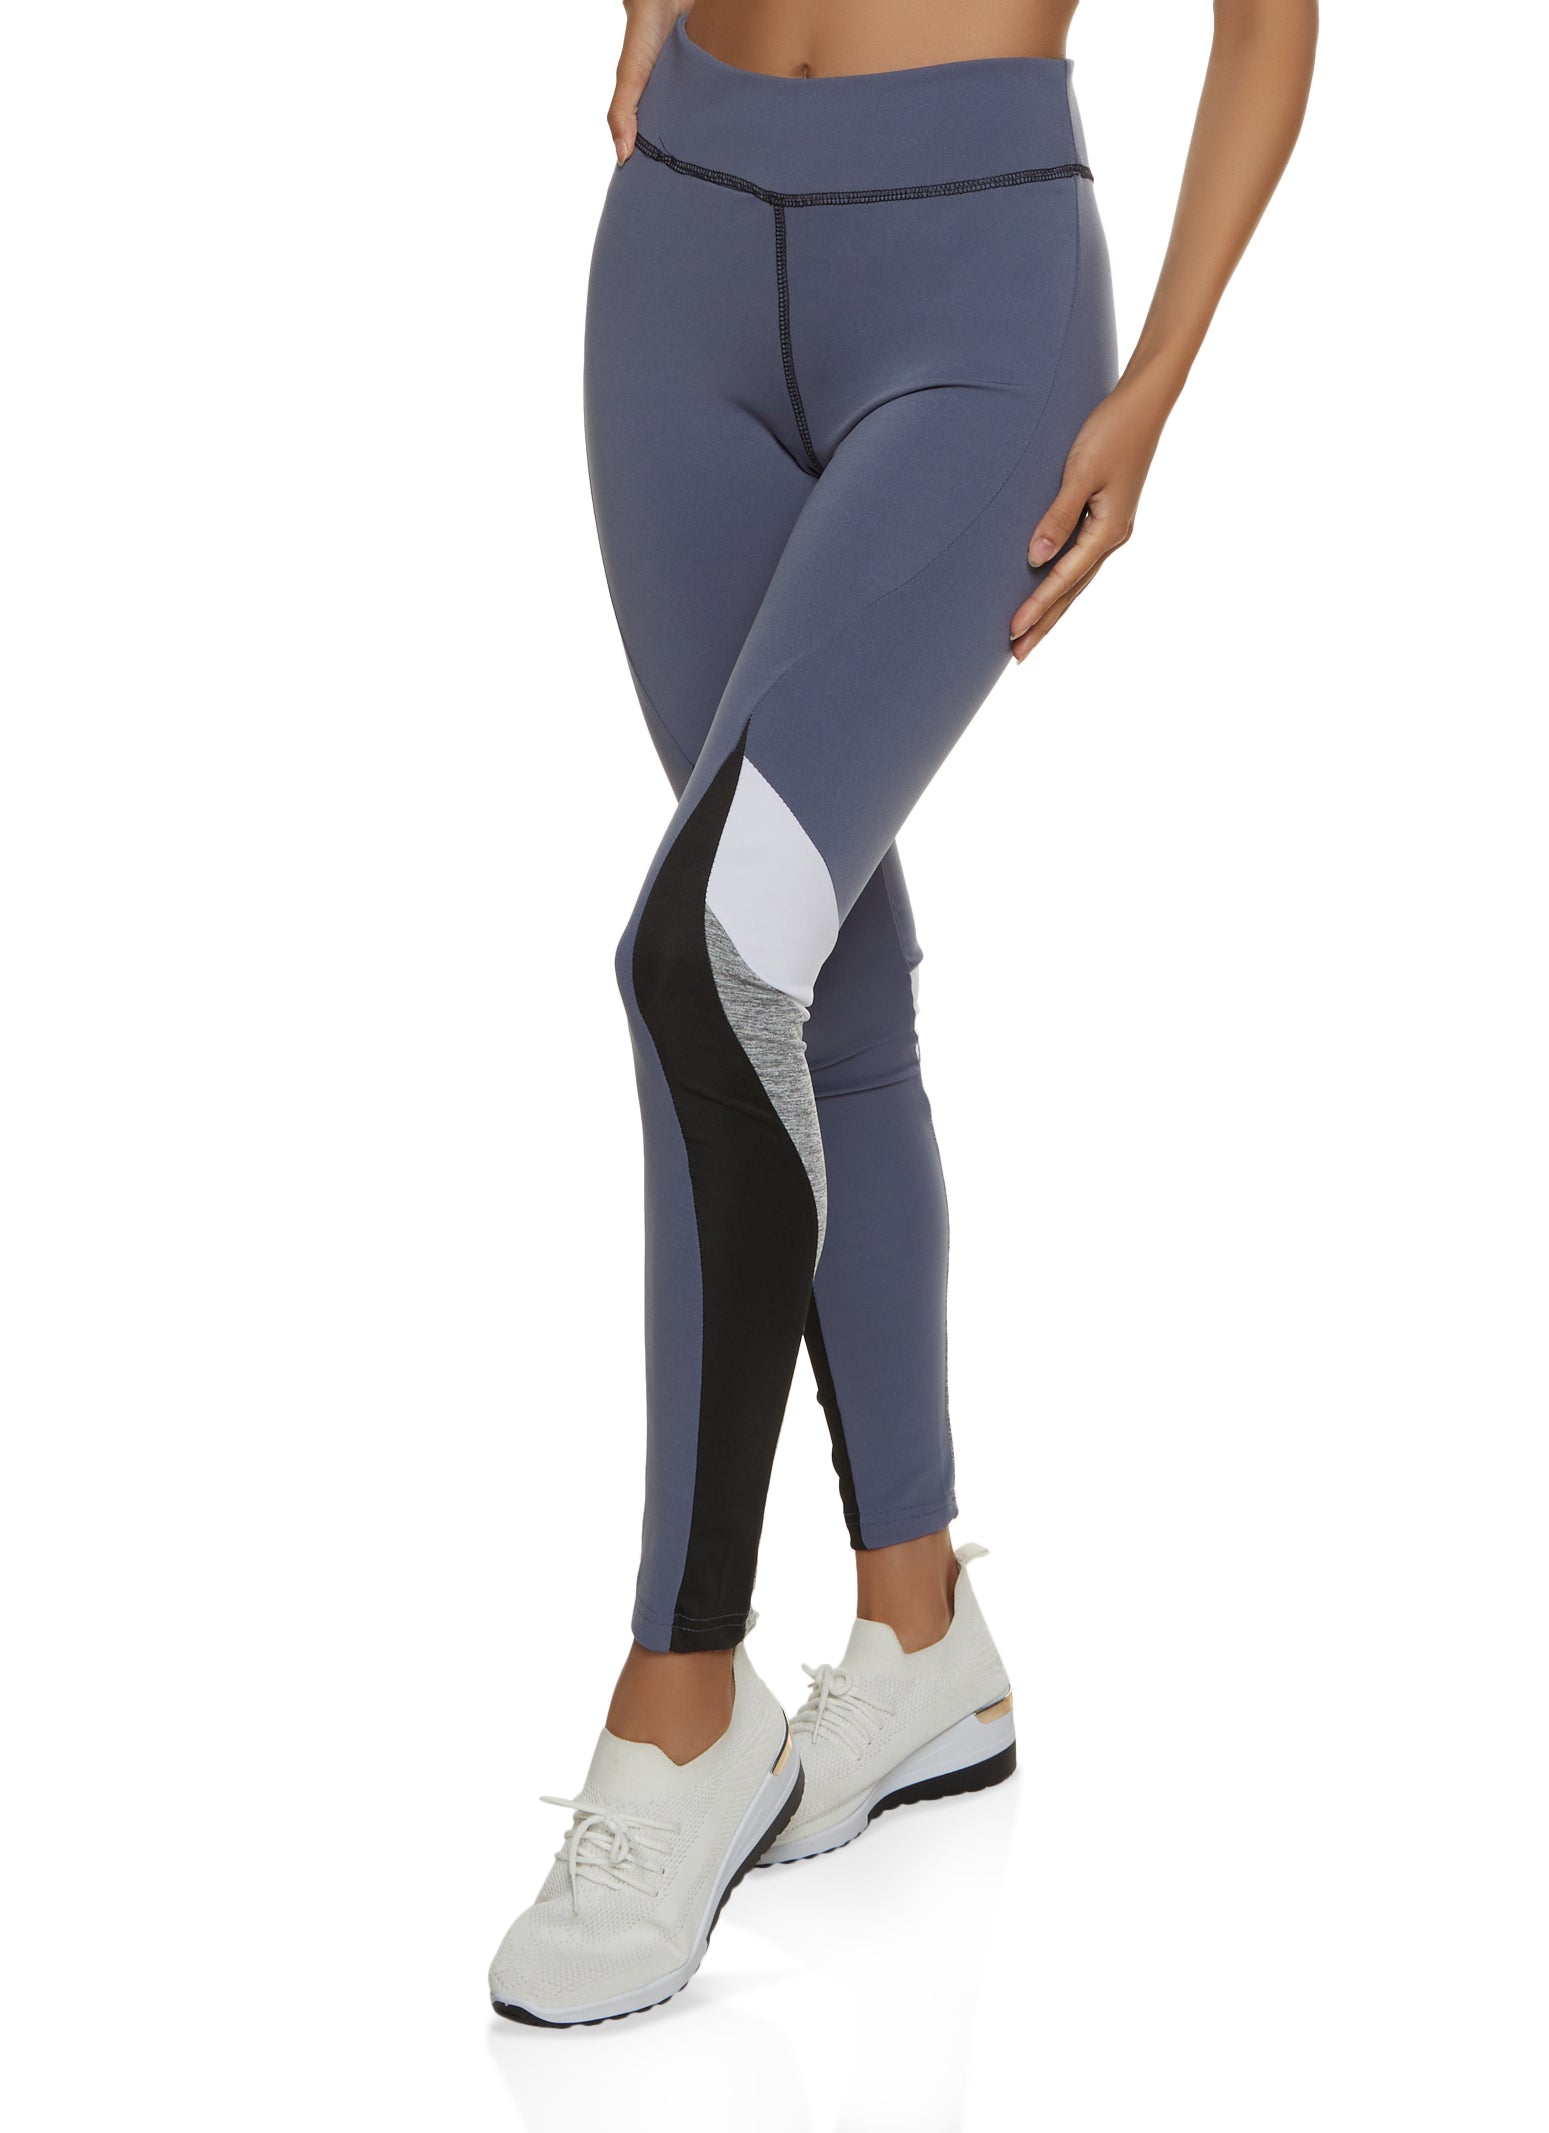 Buy Chkokko Teal Blue Color-Block Workout Leggings for Women Online @ Tata  CLiQ